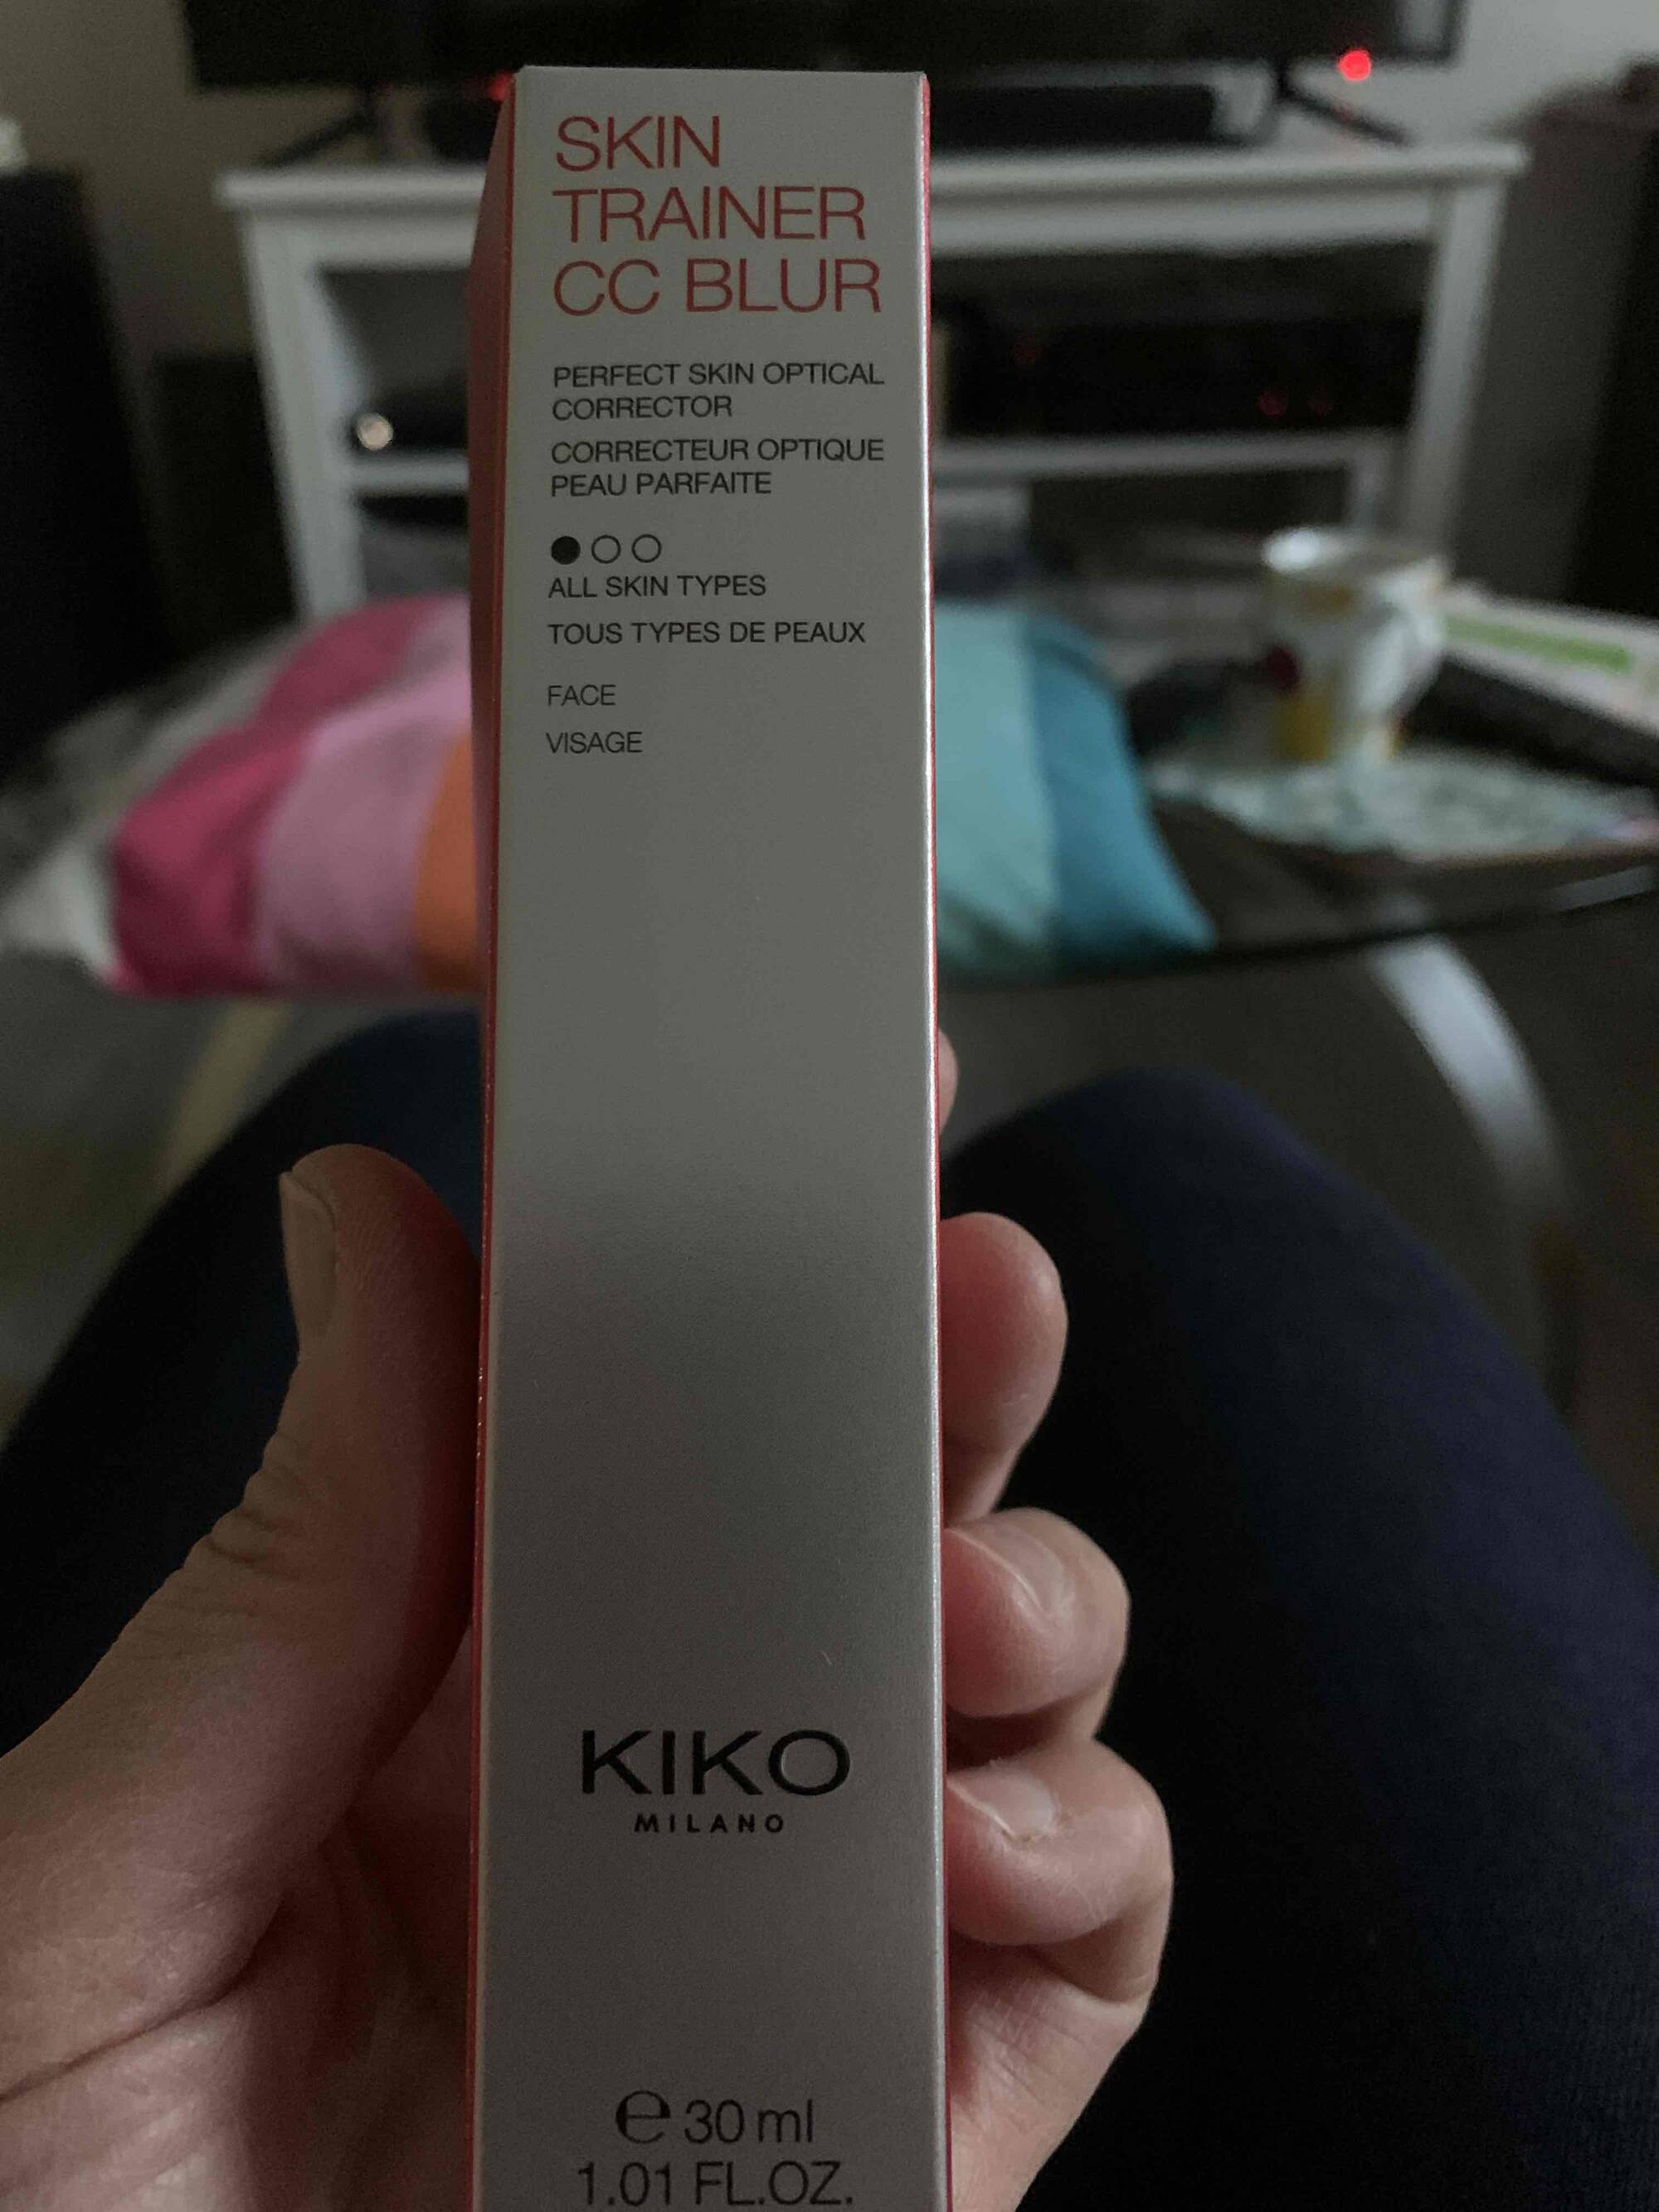 KIKO MILANO - Skin Trainer CC Blur - Correcteur optique